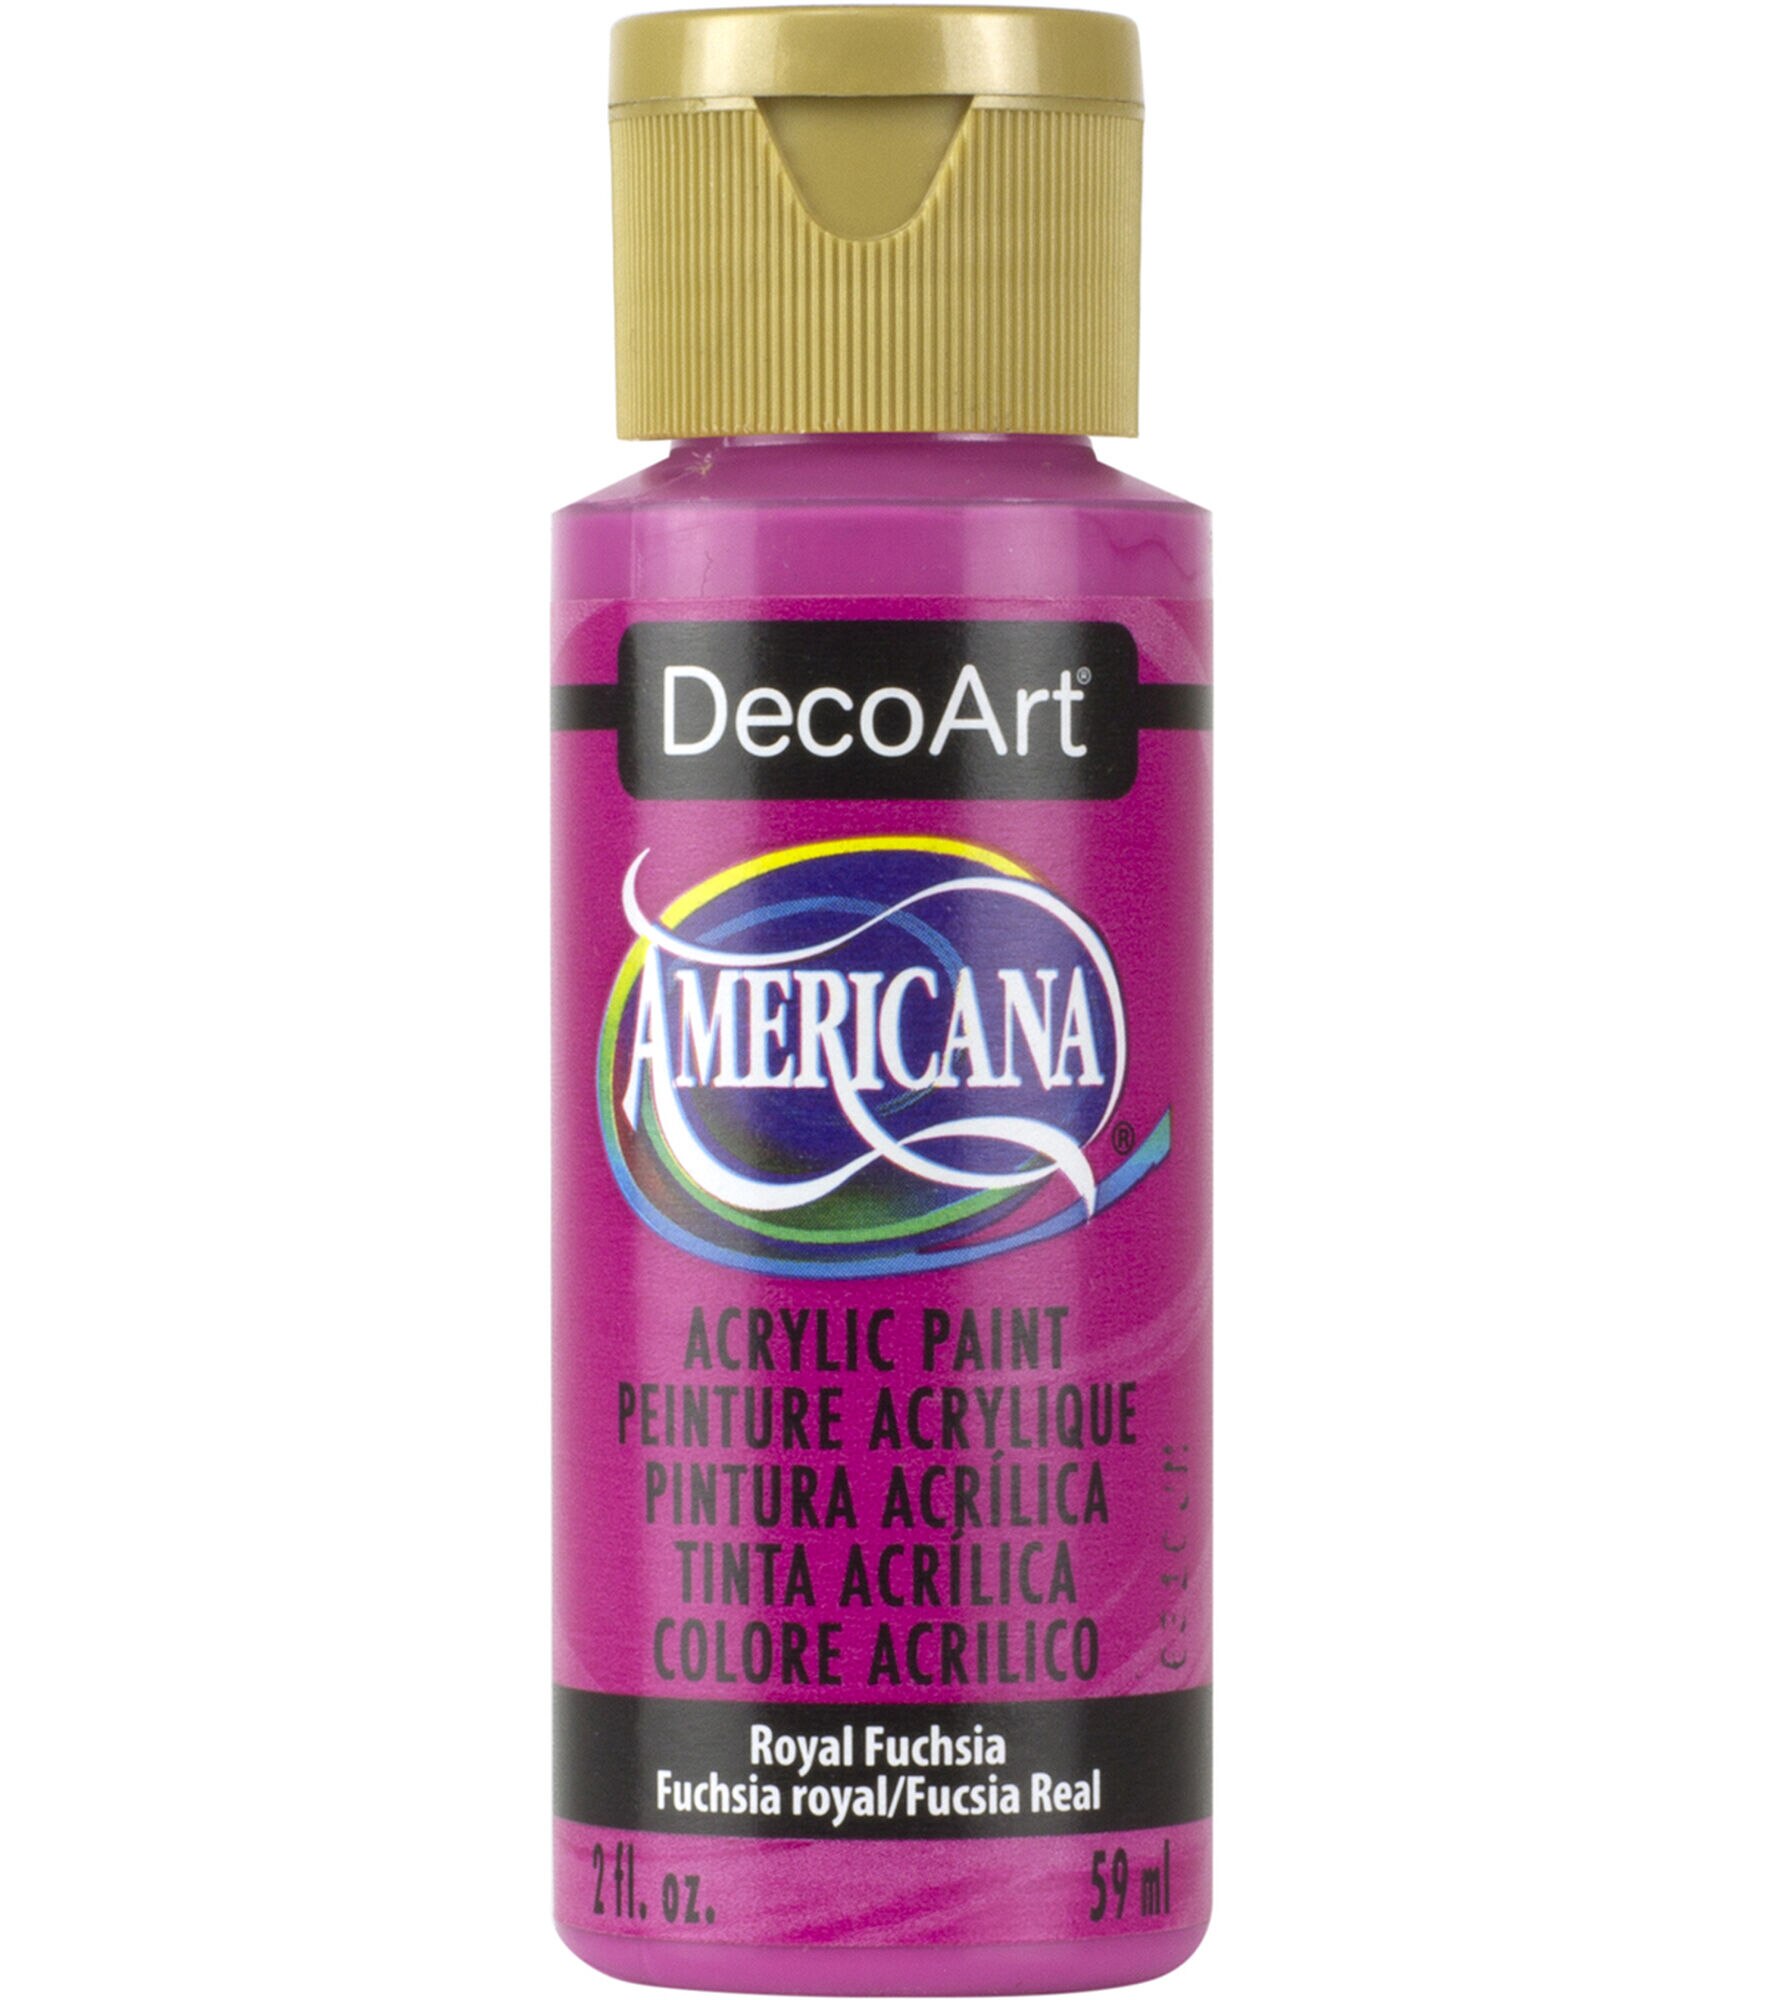 DecoArt Americana Acrylic 2oz Paint, Royal Fuchsia, hi-res